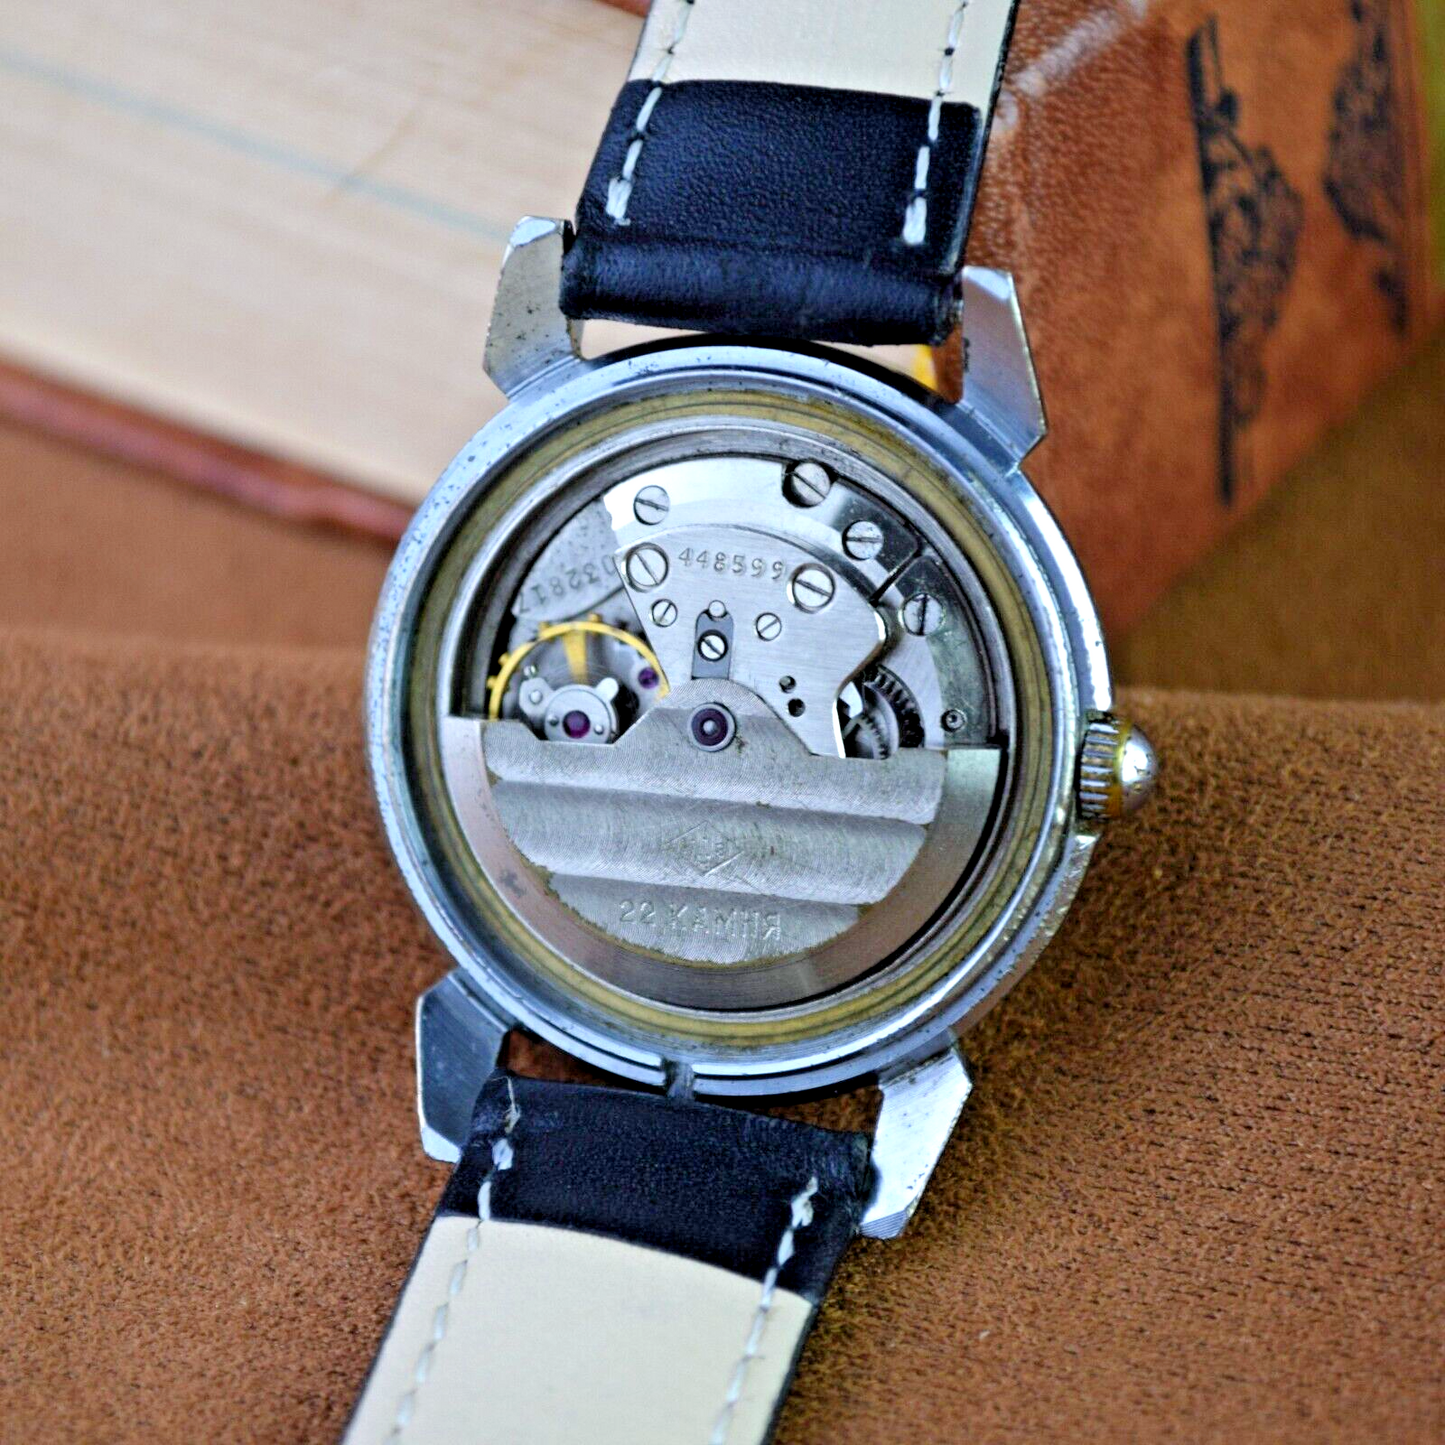 Soviet Automatic Watch Rodina Poljot 22 Jewels 1MChZ 1950s USSR Kirovskie Watch - Vintagecoua